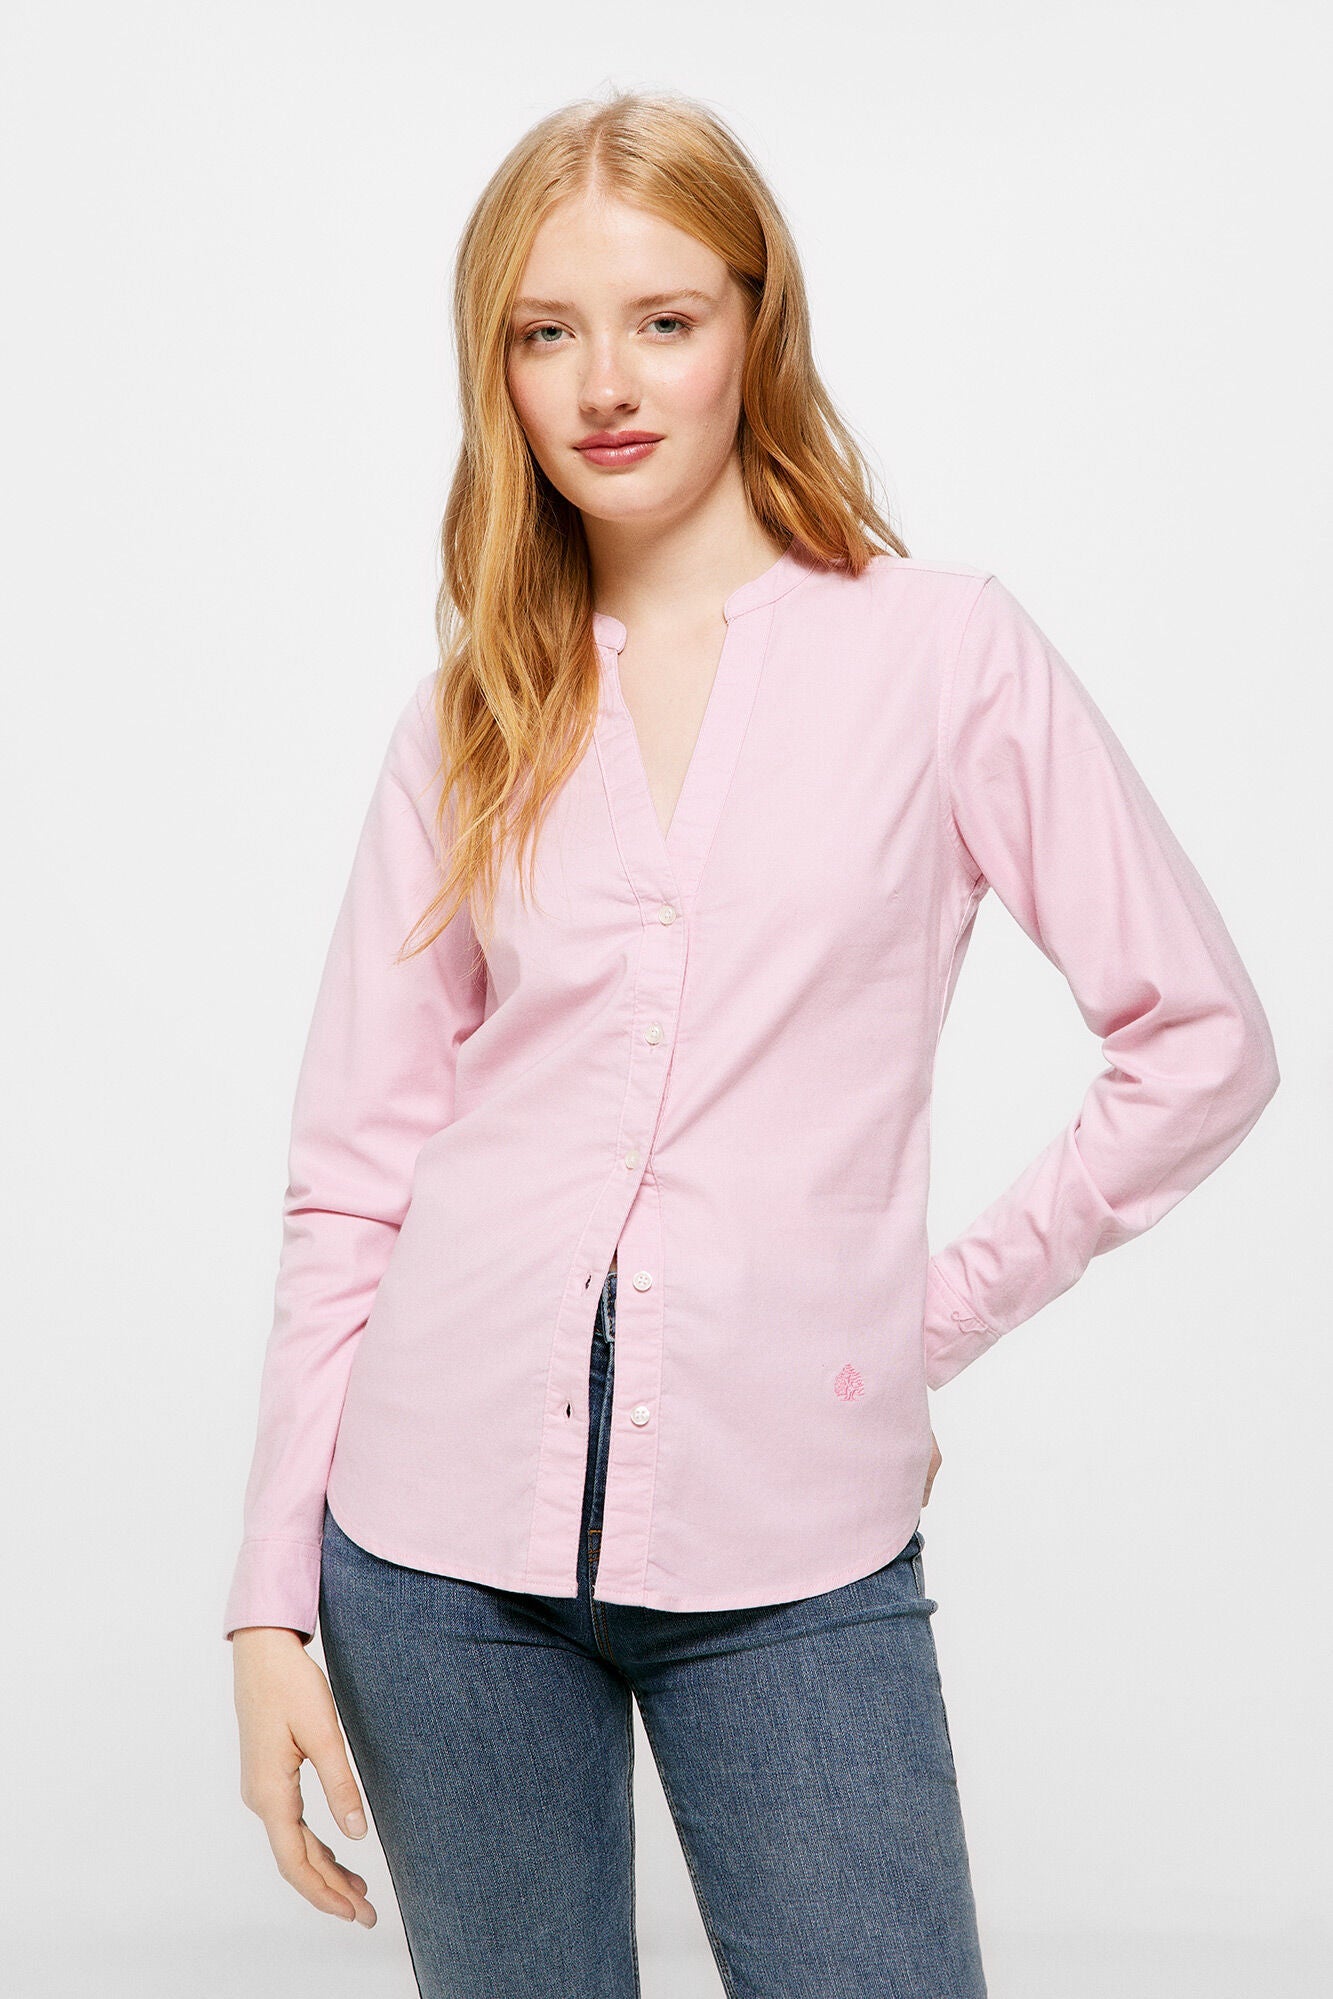 Mandarin collar Oxford blouse